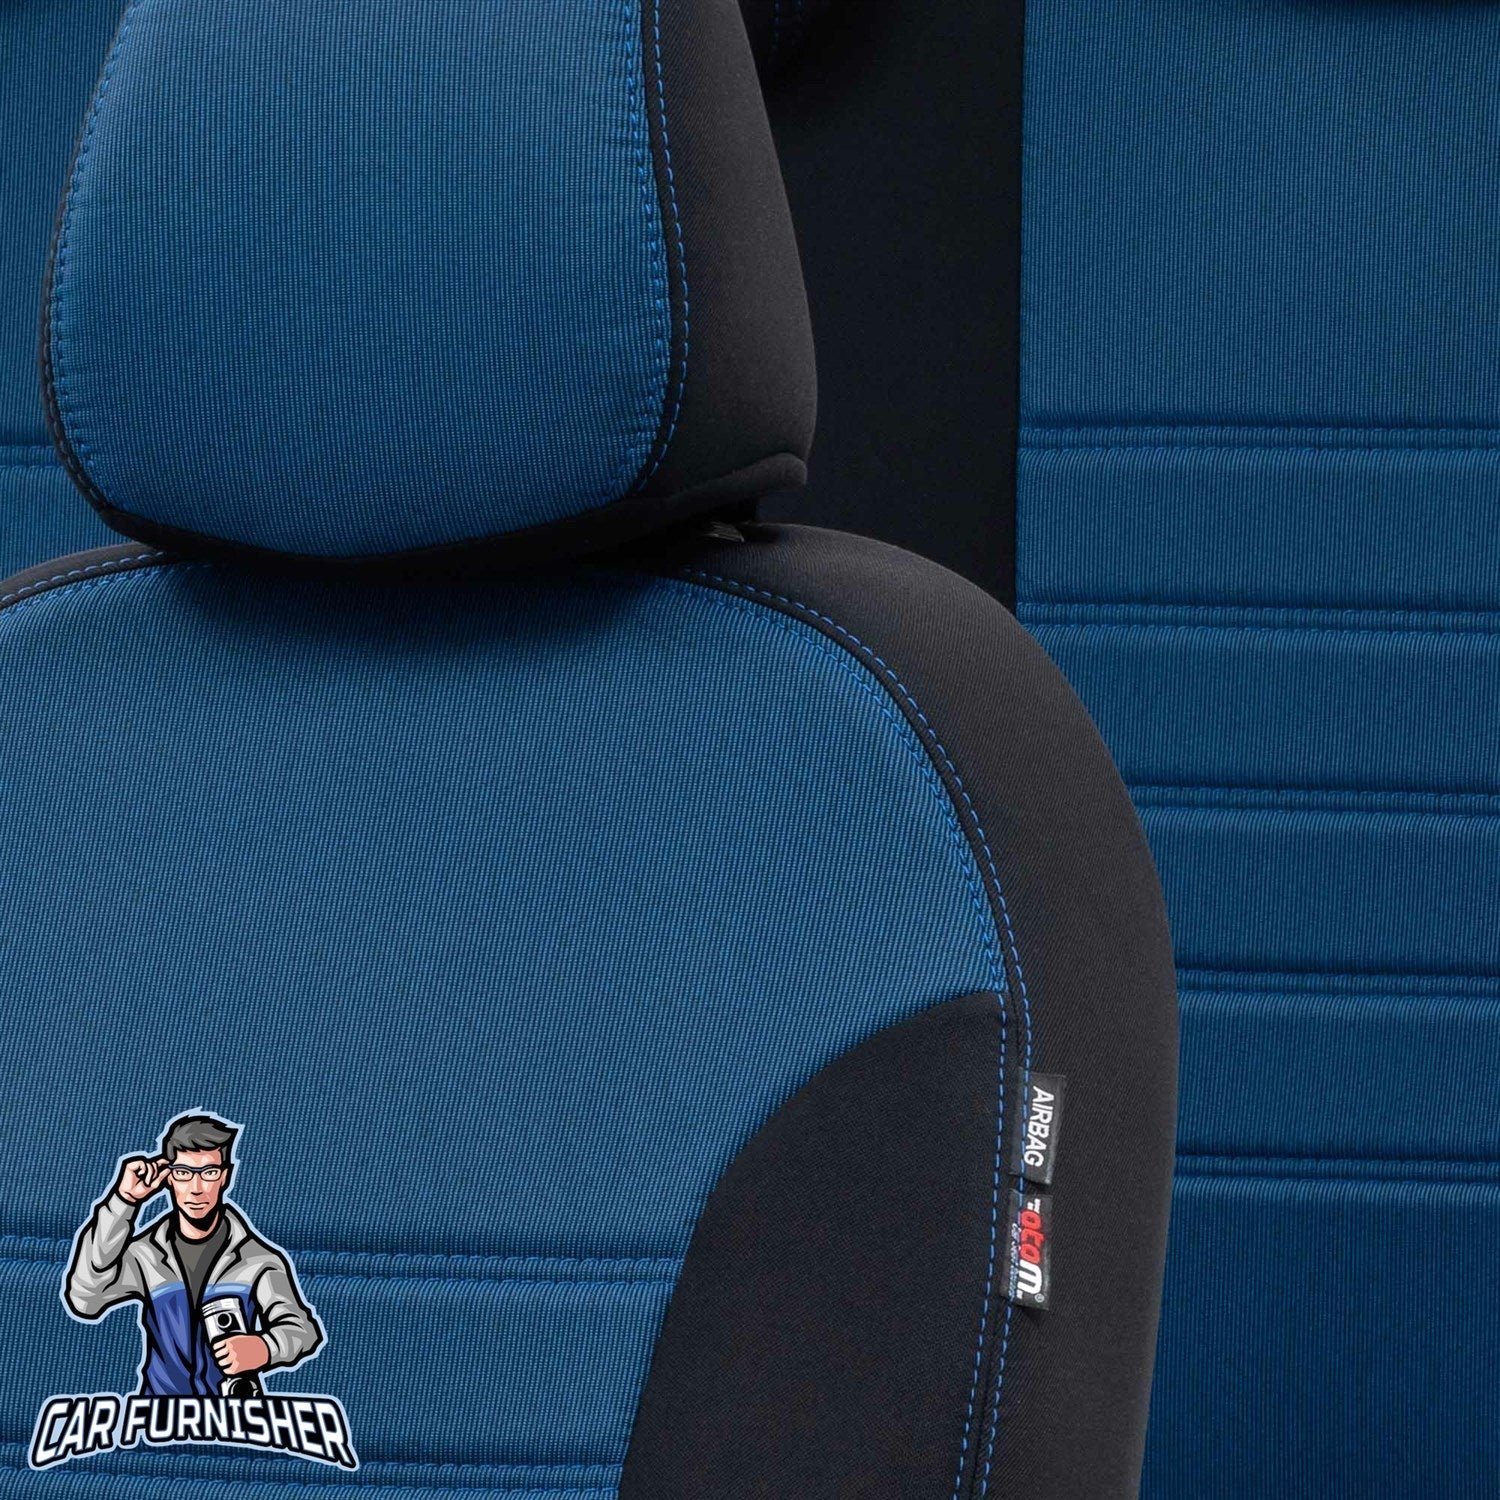 Renault Safrane Seat Covers Original Jacquard Design Blue Jacquard Fabric